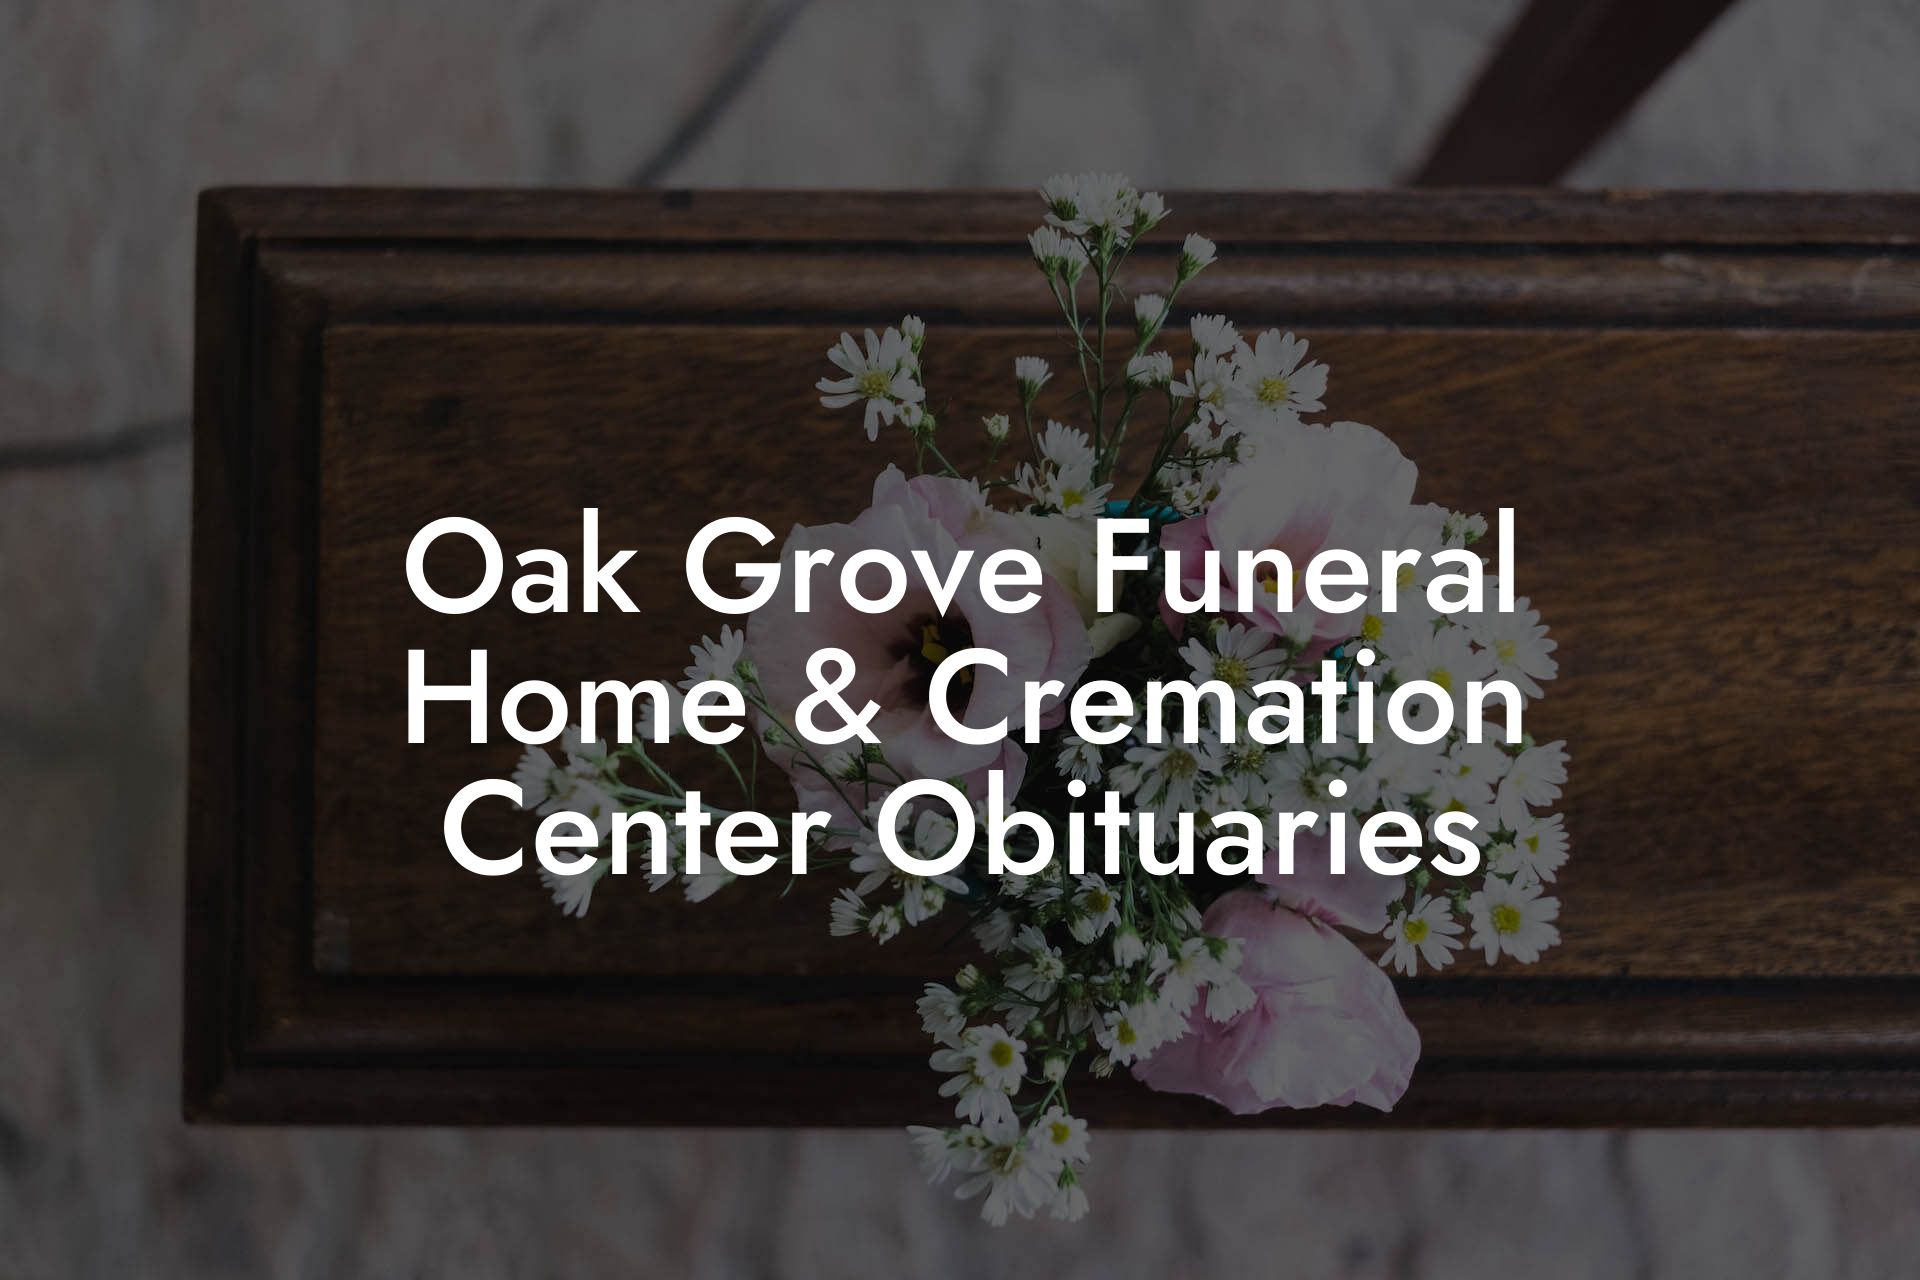 Oak Grove Funeral Home & Cremation Center Obituaries